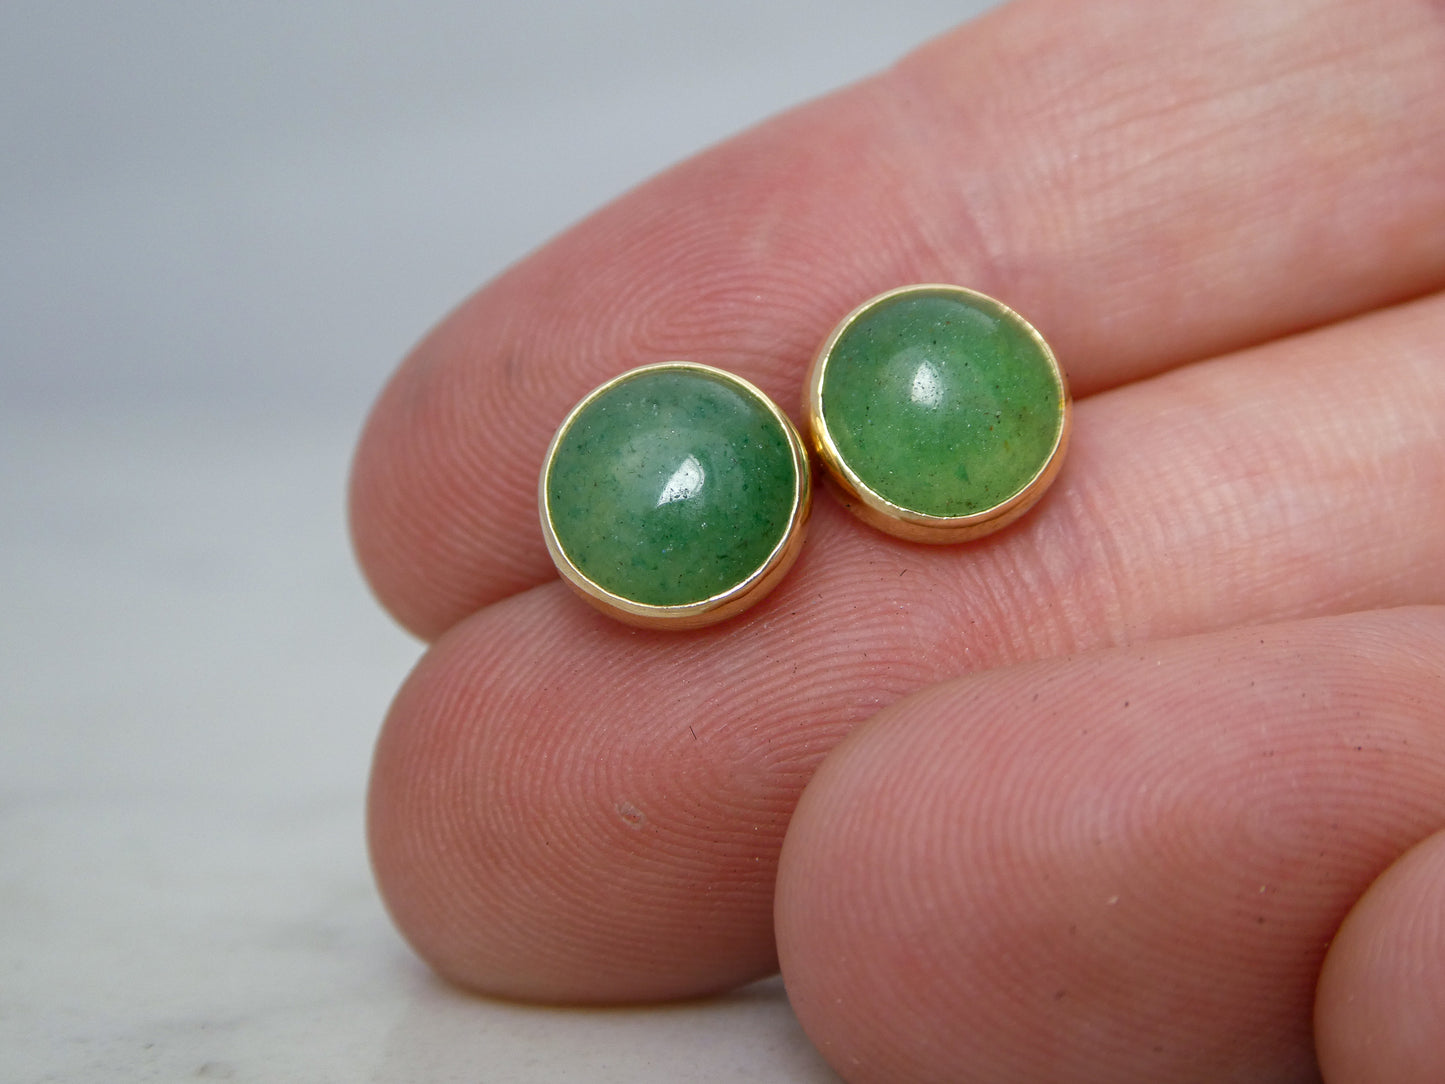 Green Aventurine in 14k Gold Bezel Studs - 8mm round cabochon earrings